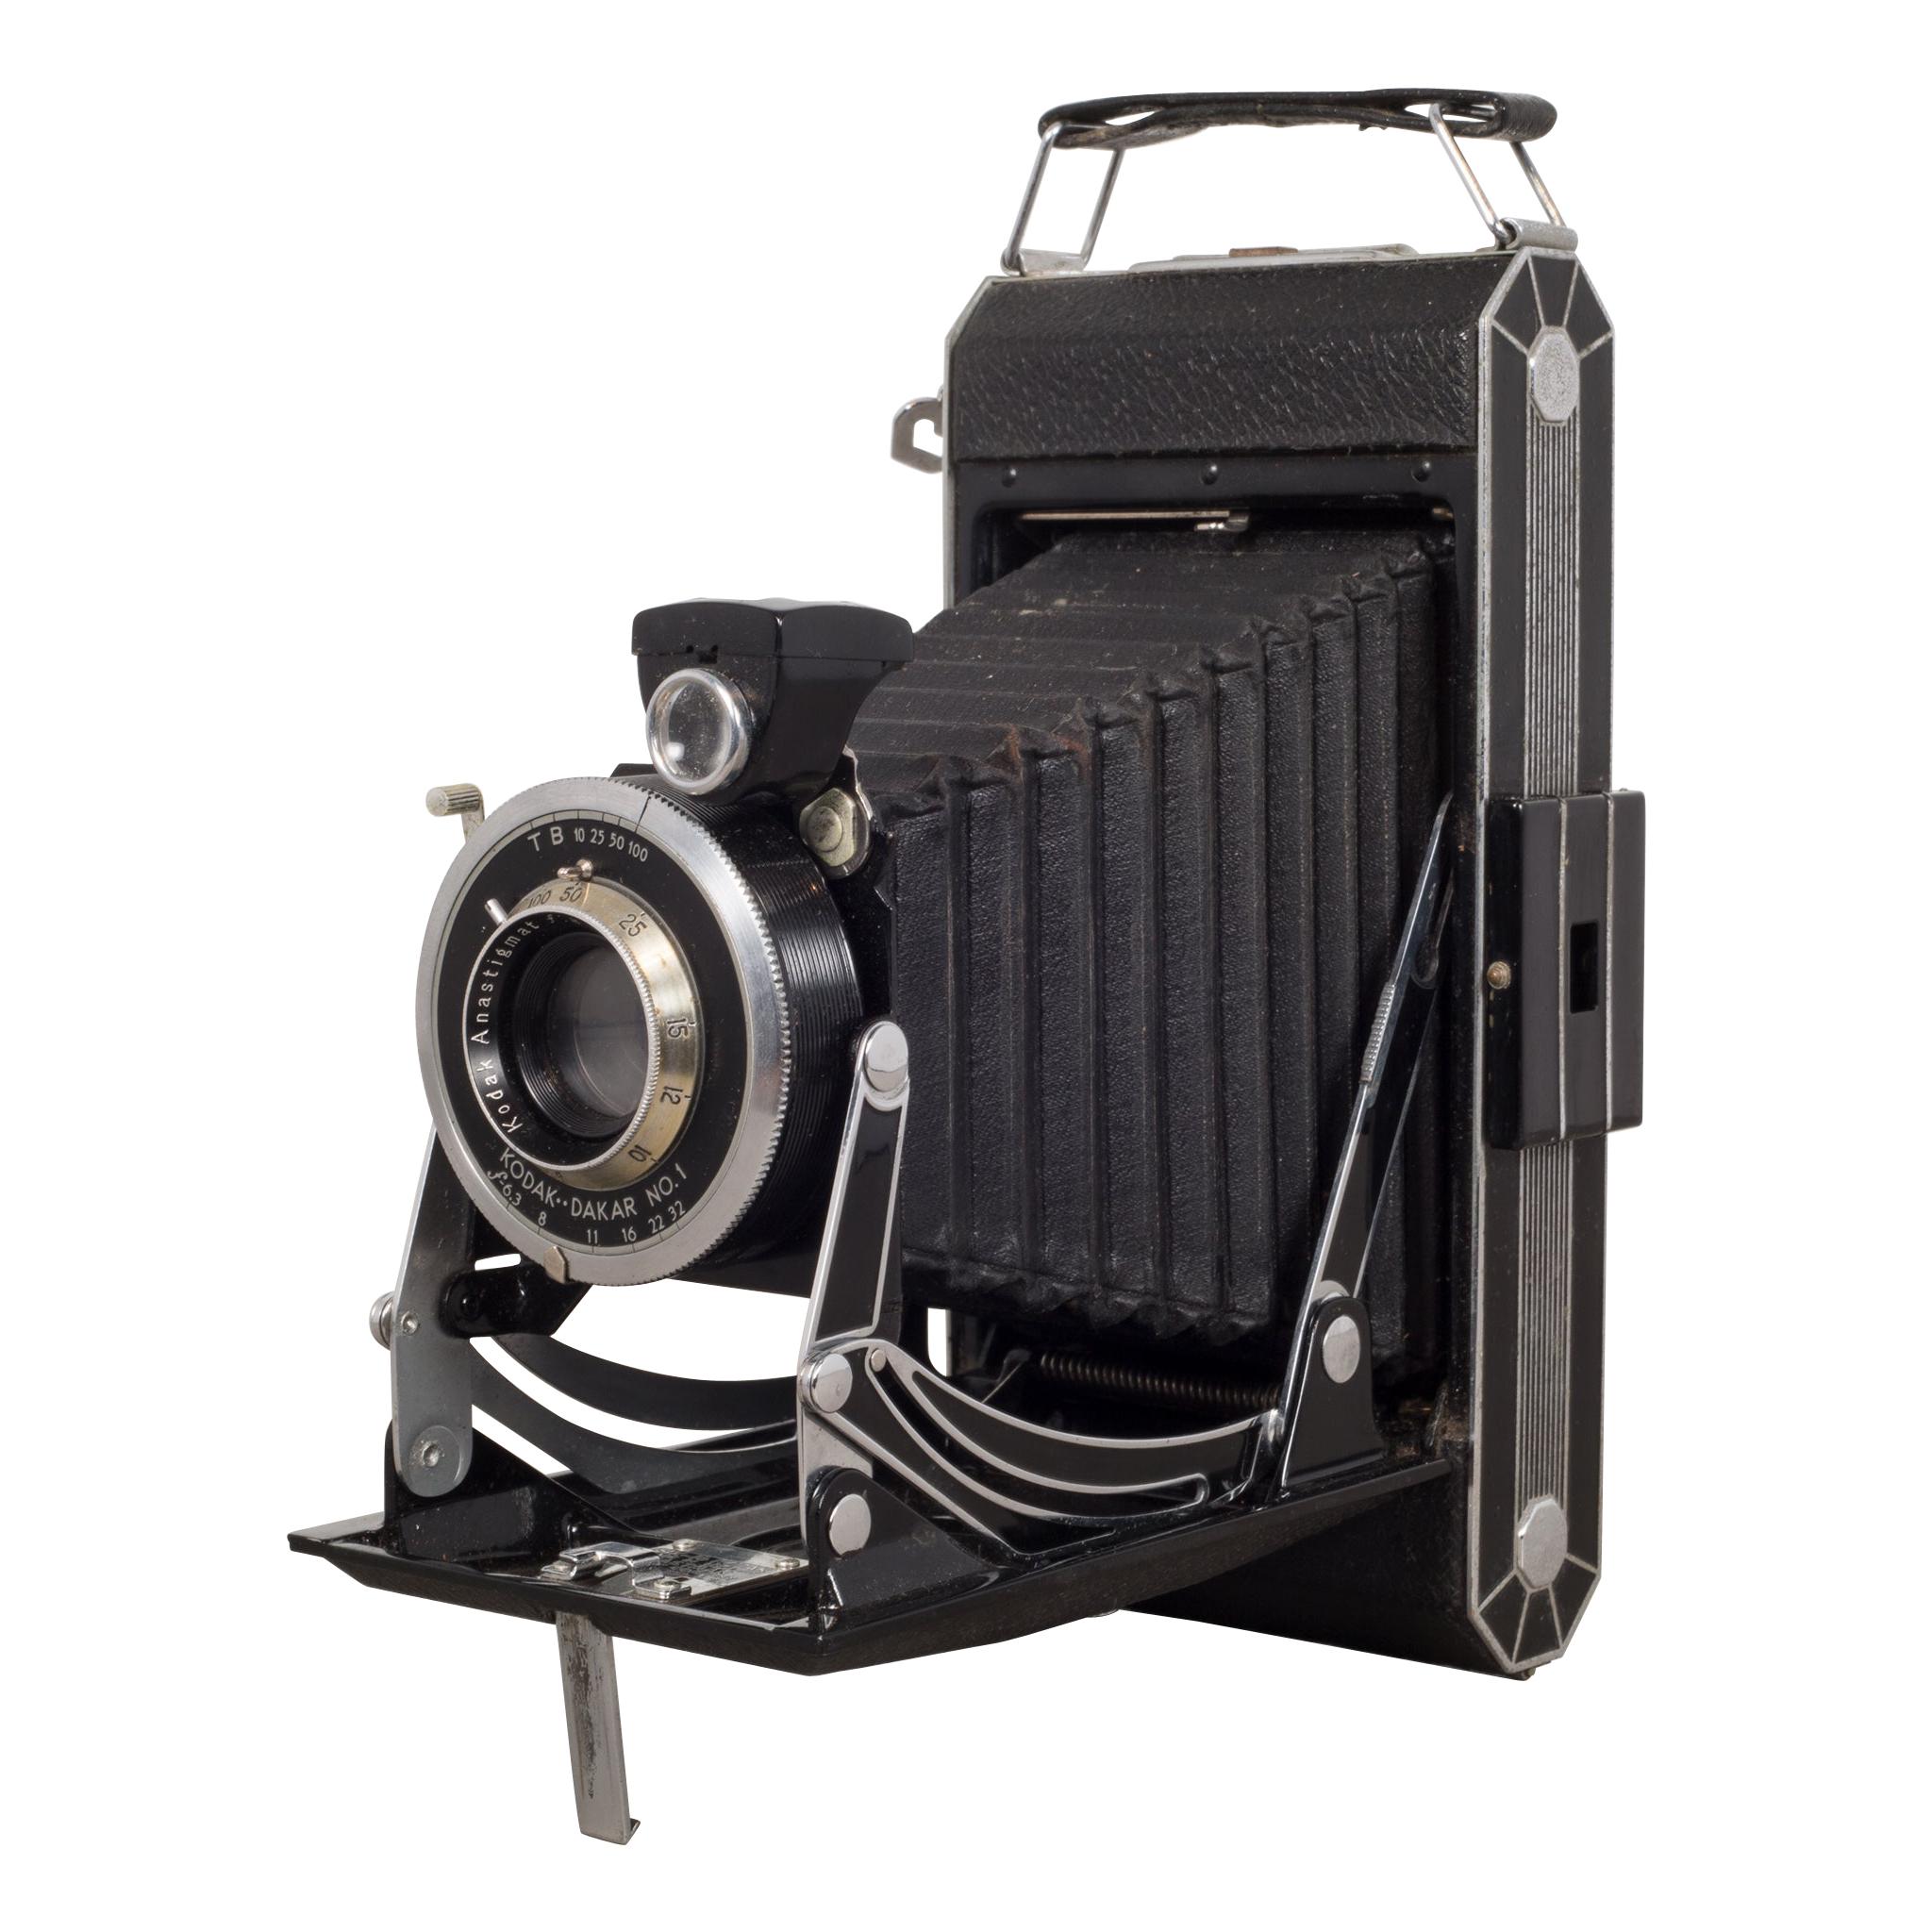 Art Deco "Kodak-Dakar No.1" Folding Camera, circa 1930